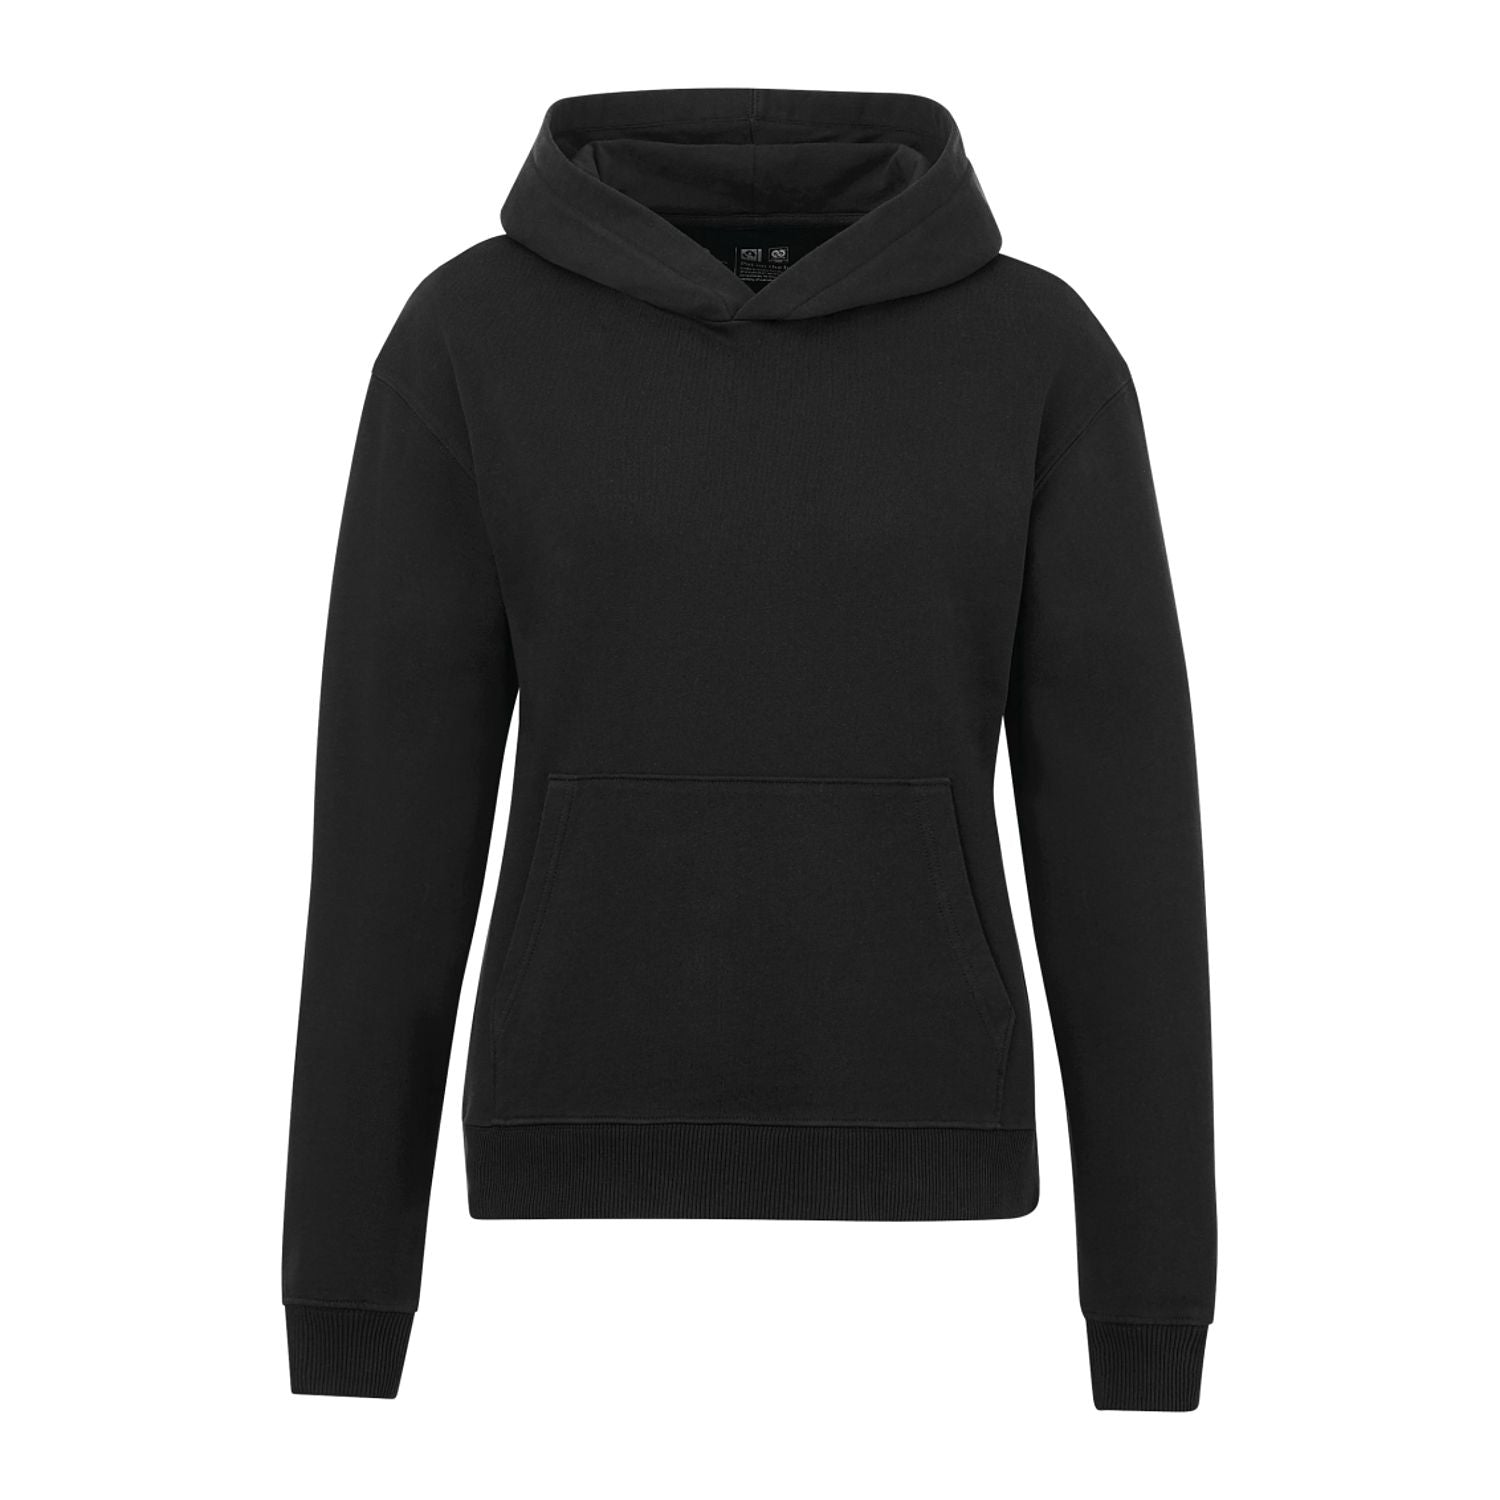 Customizable Tentree women's organic cotton classic hoodie in black.